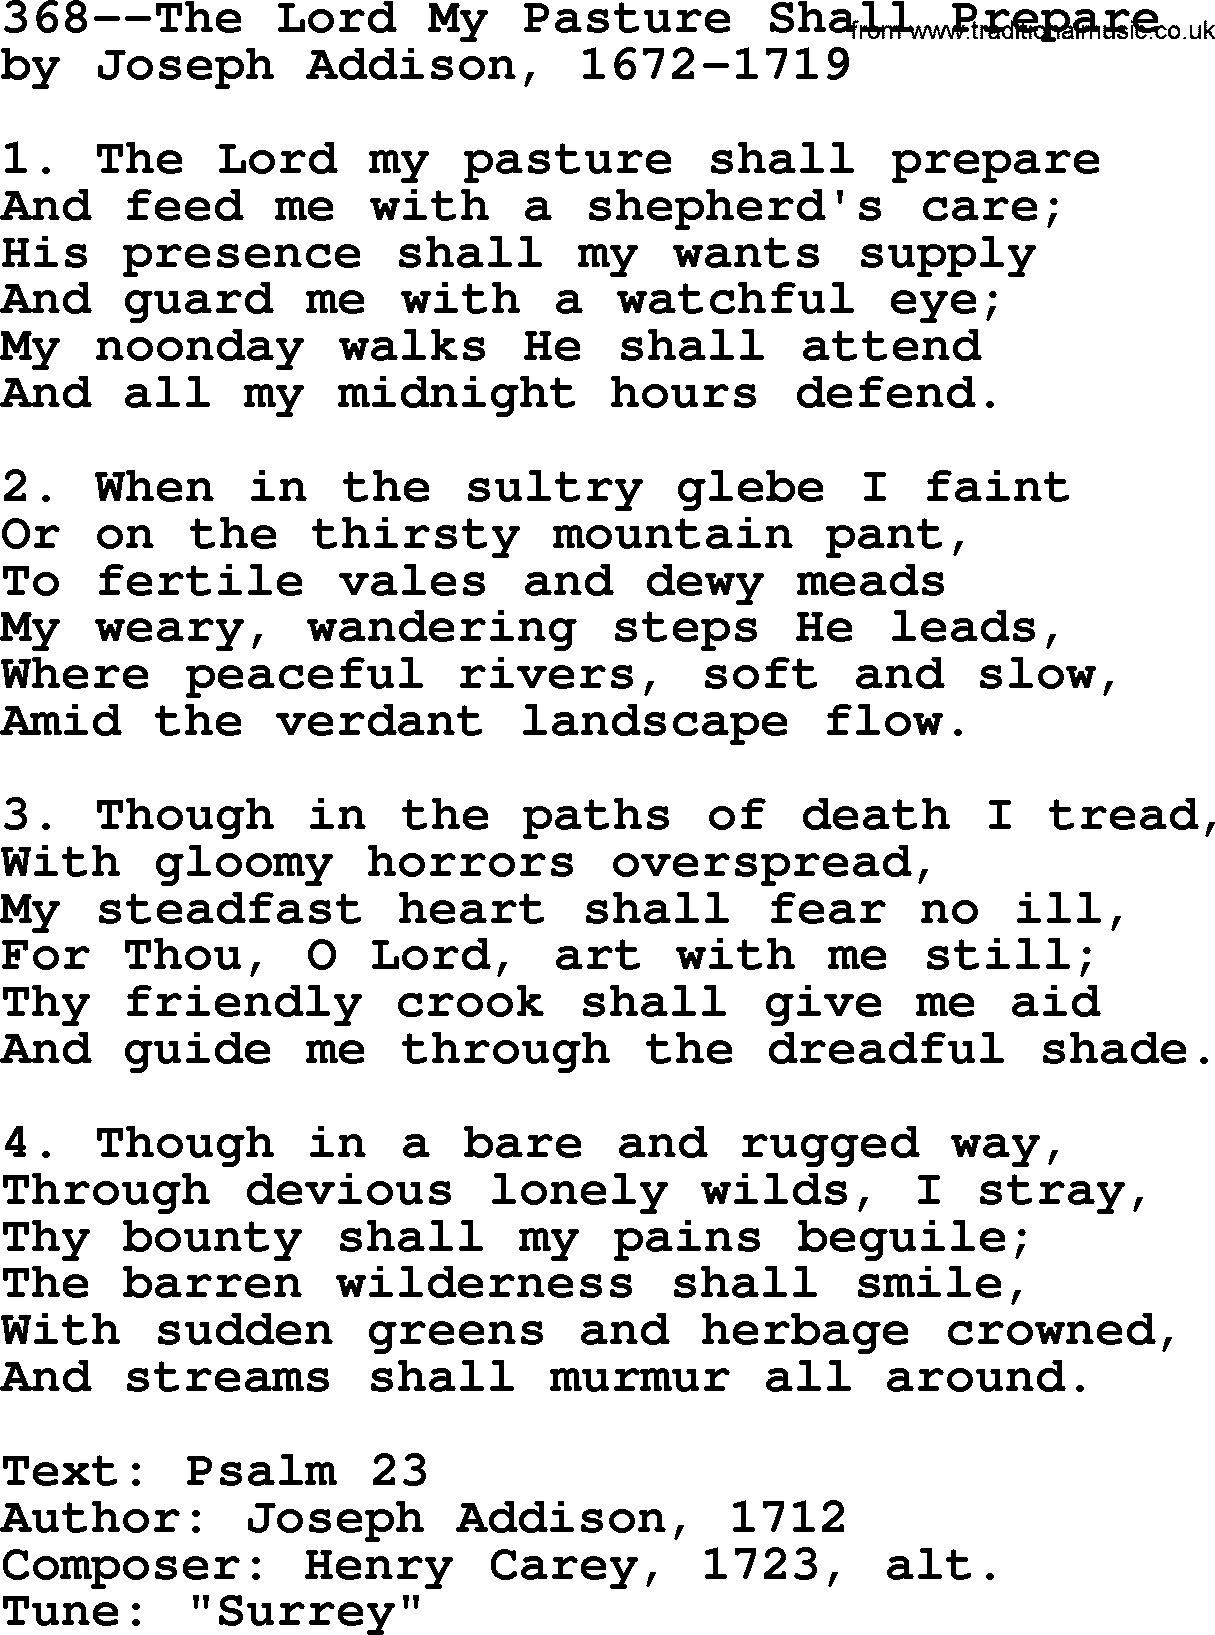 Lutheran Hymn: 368--The Lord My Pasture Shall Prepare.txt lyrics with PDF